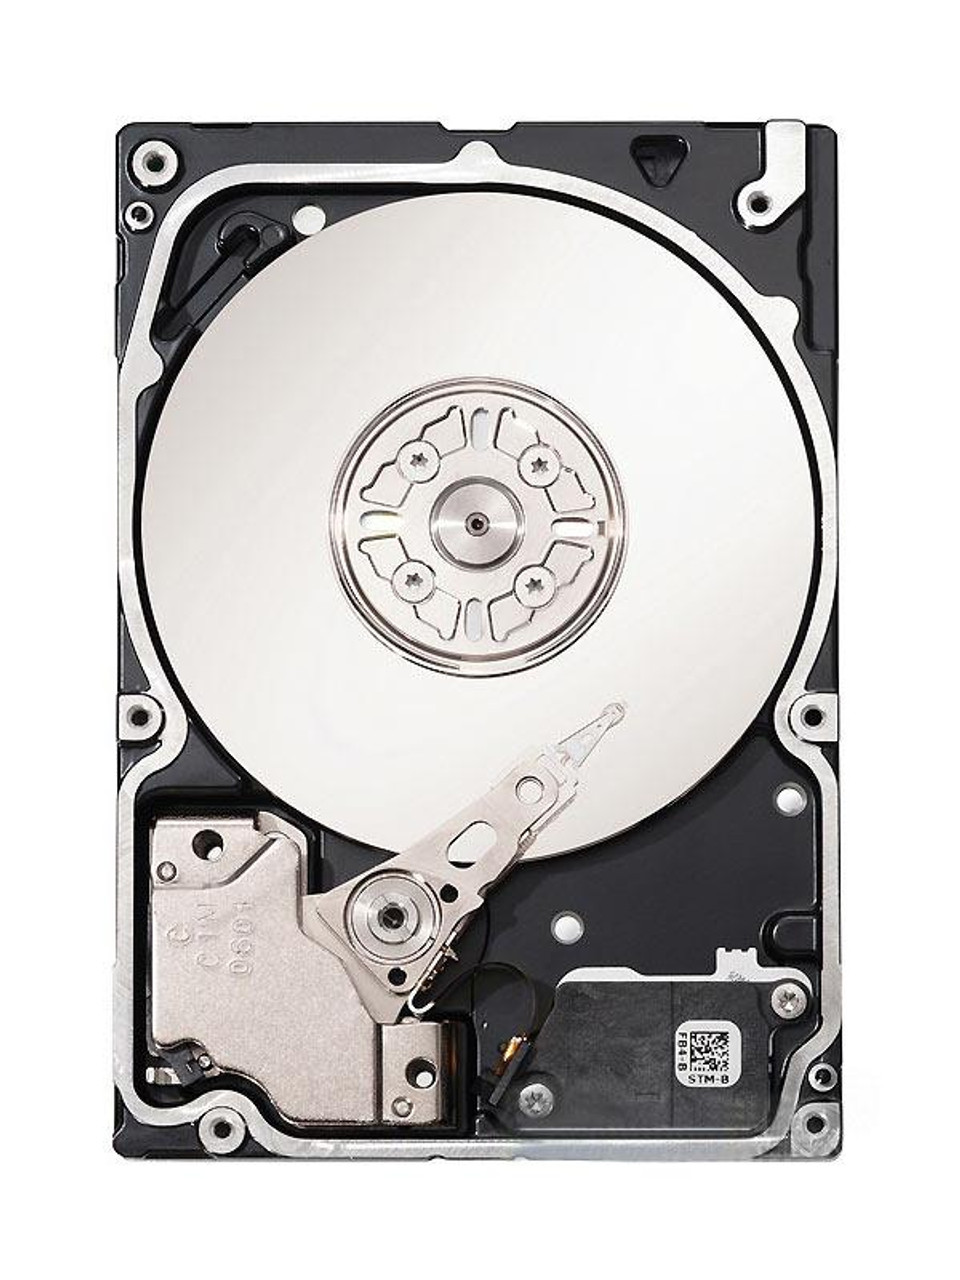 NB-2SS10-146 - EMC 146GB 10000RPM SAS 3GB/s 2.5-inch Internal Hard Disk Drive